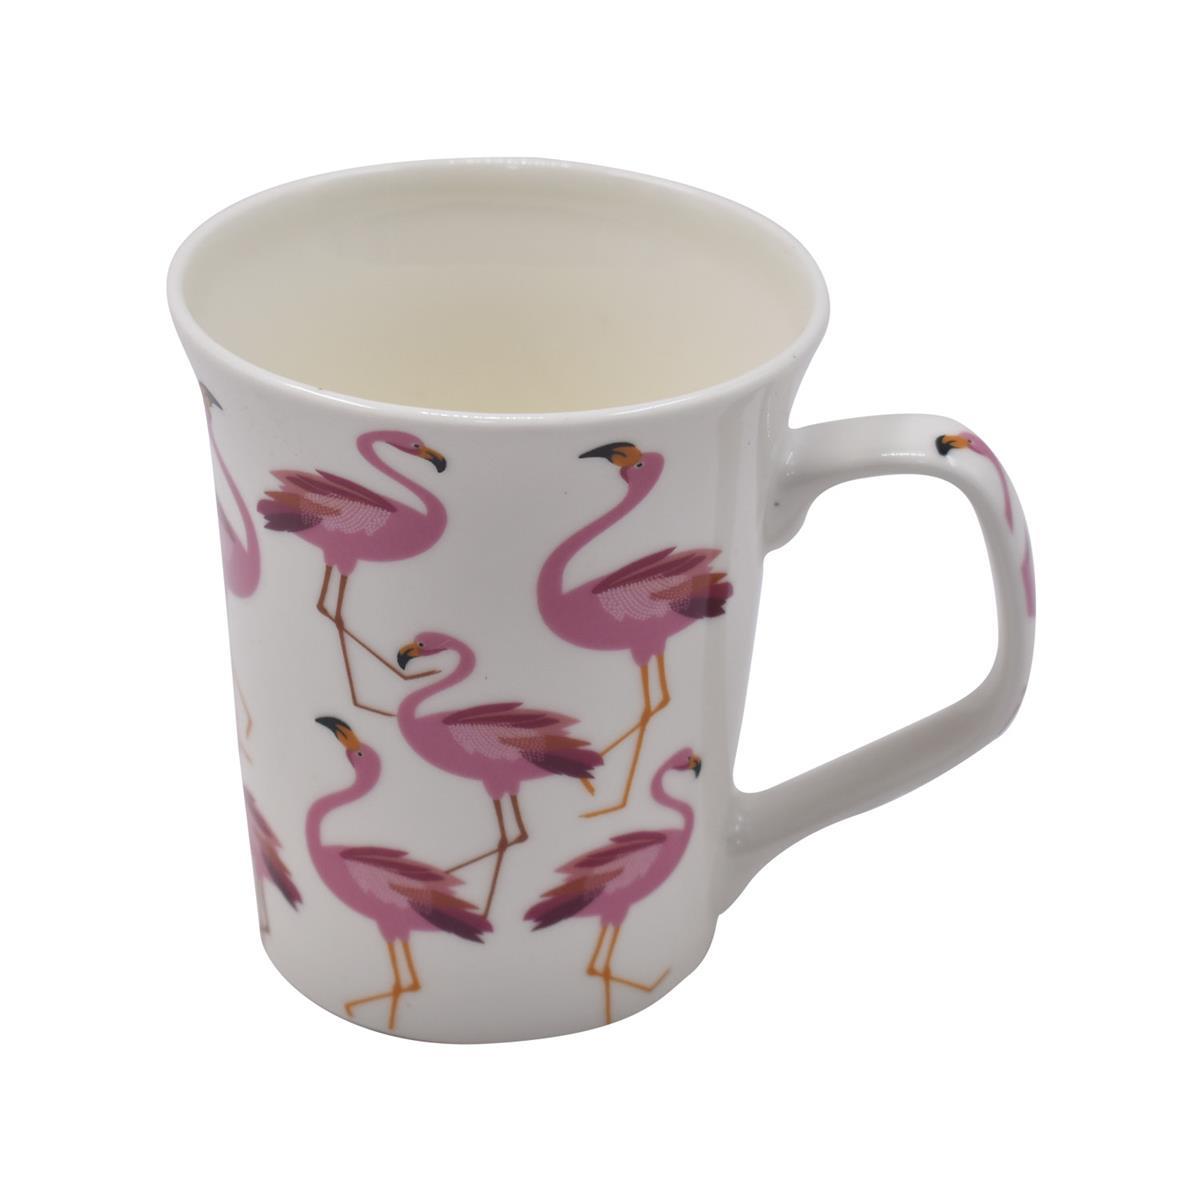 Kookee Printed Ceramic Tall Coffee or Tea Mug with handle for Office, Home or Gifting - 325ml (BPM4611-D)